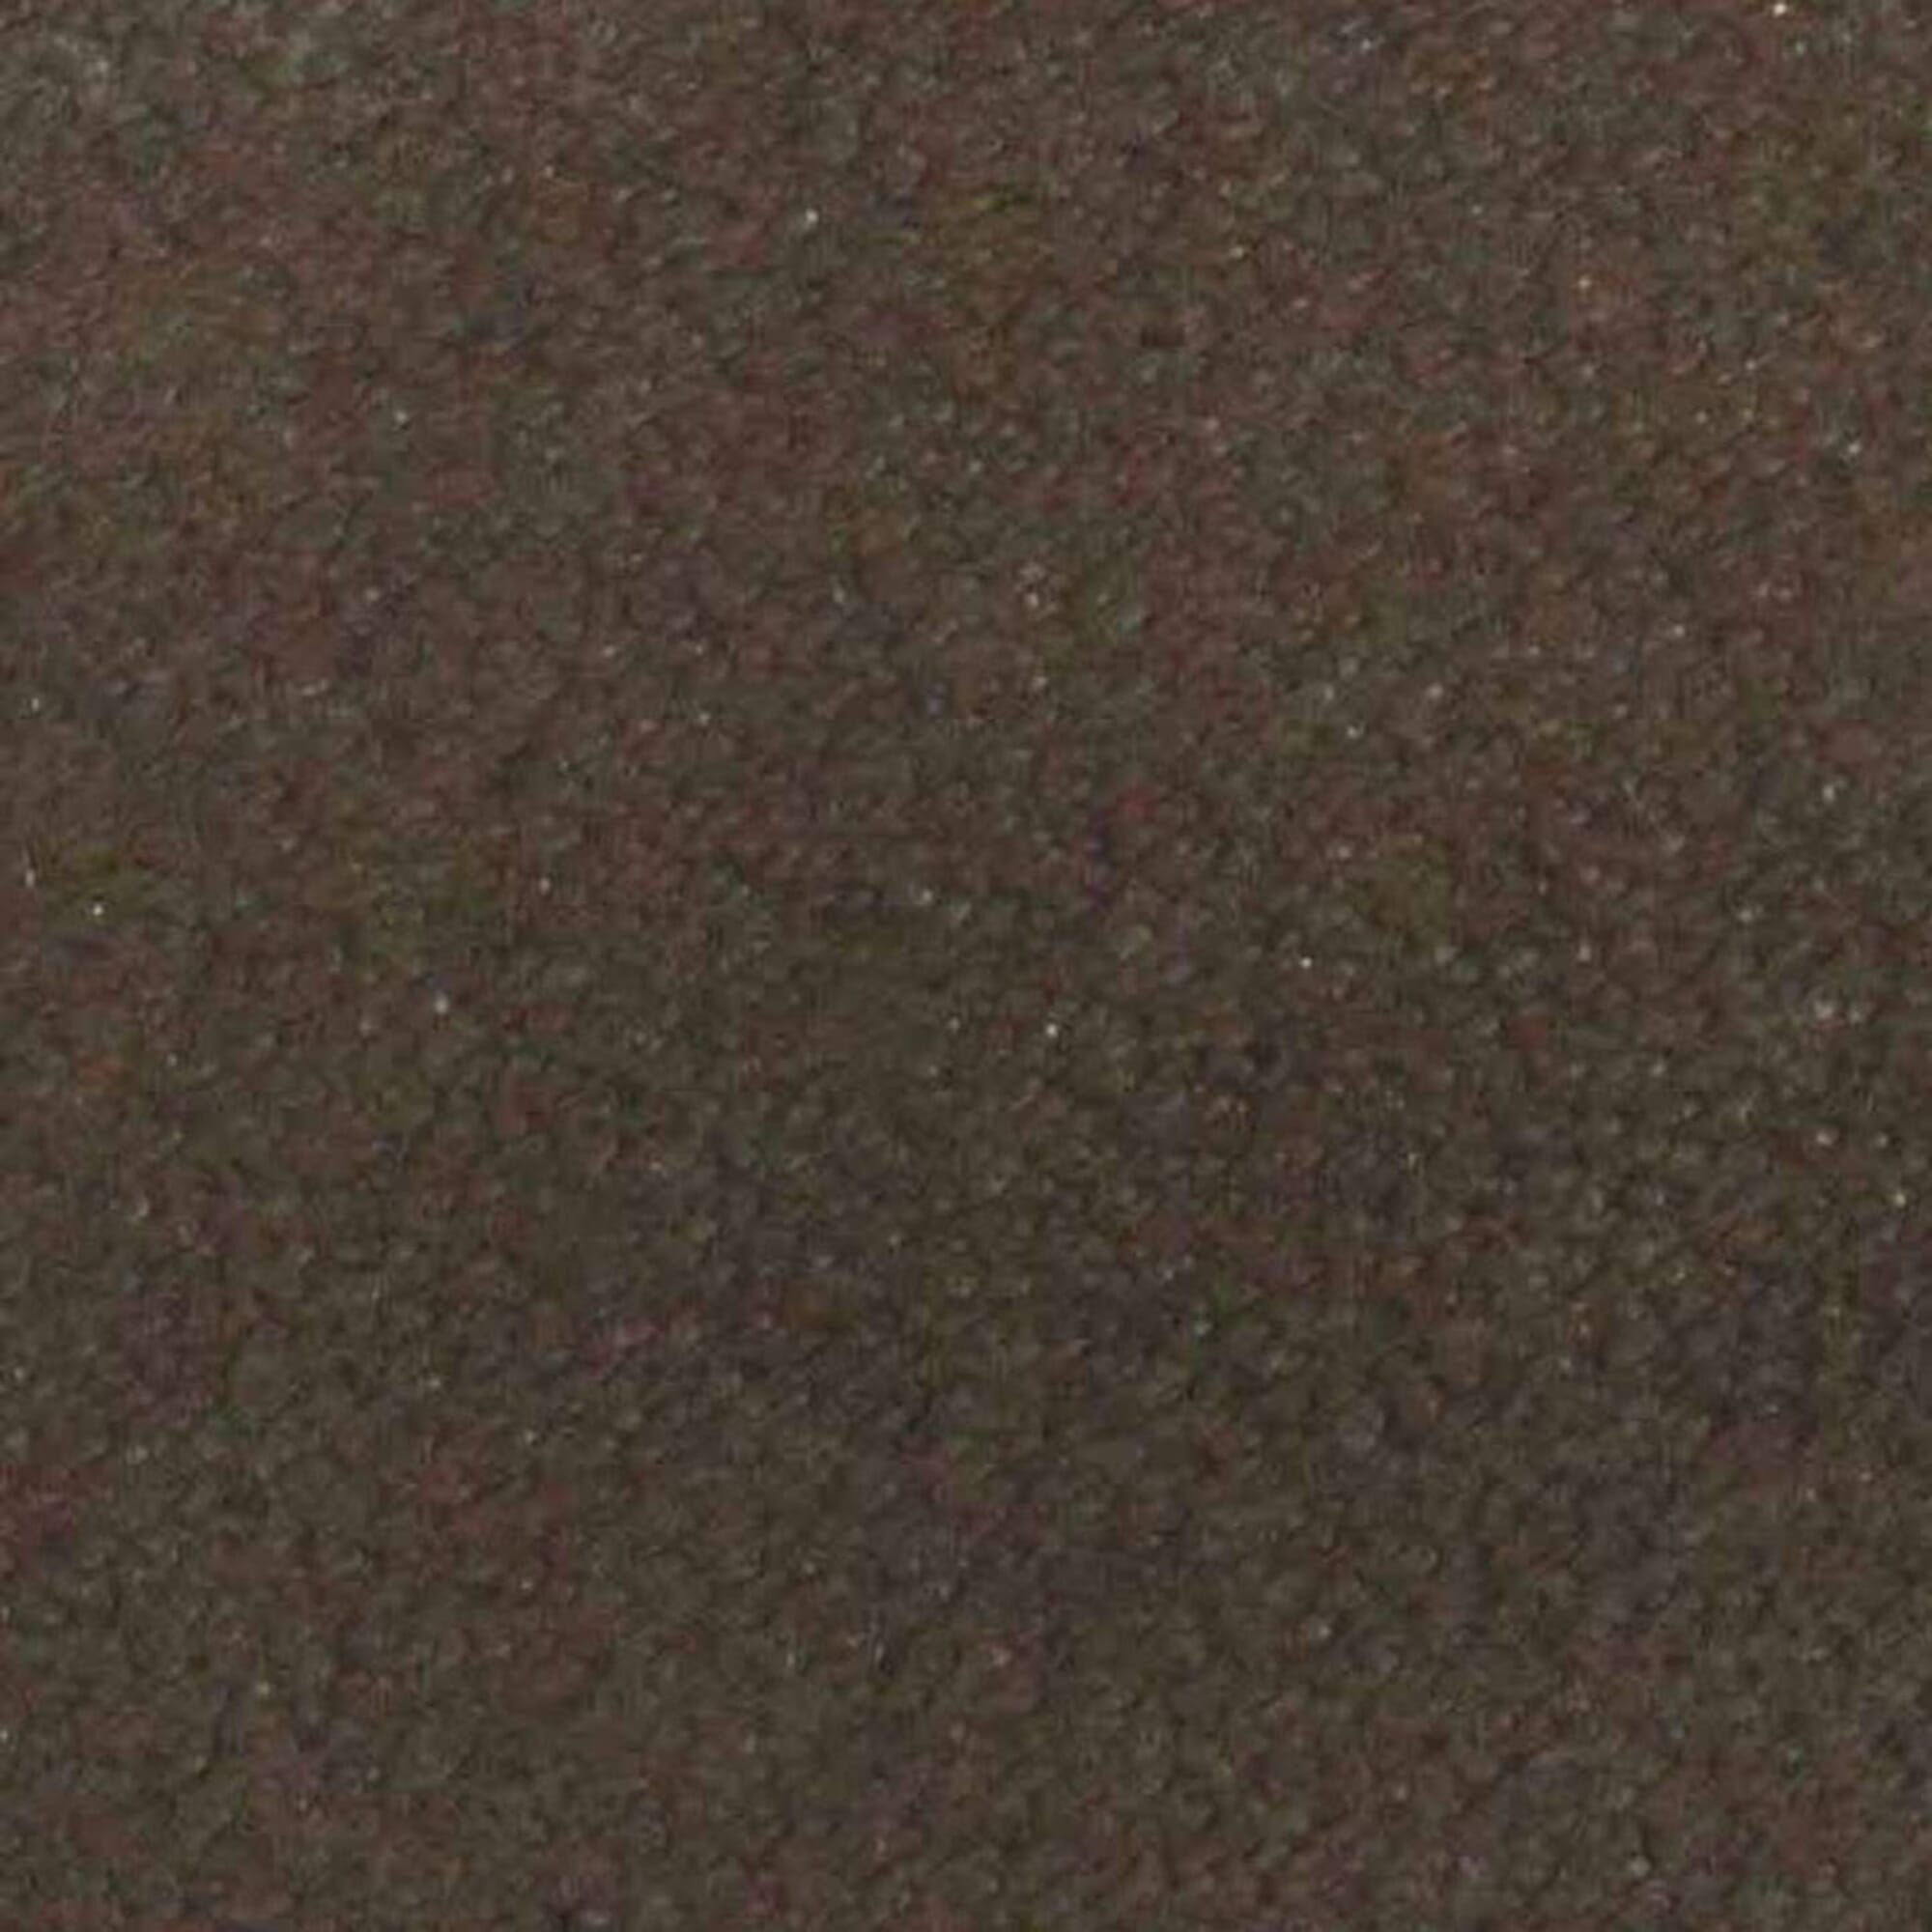 Batik 100ml 3 4oz Leather Dye, Chestnut Brown Leather